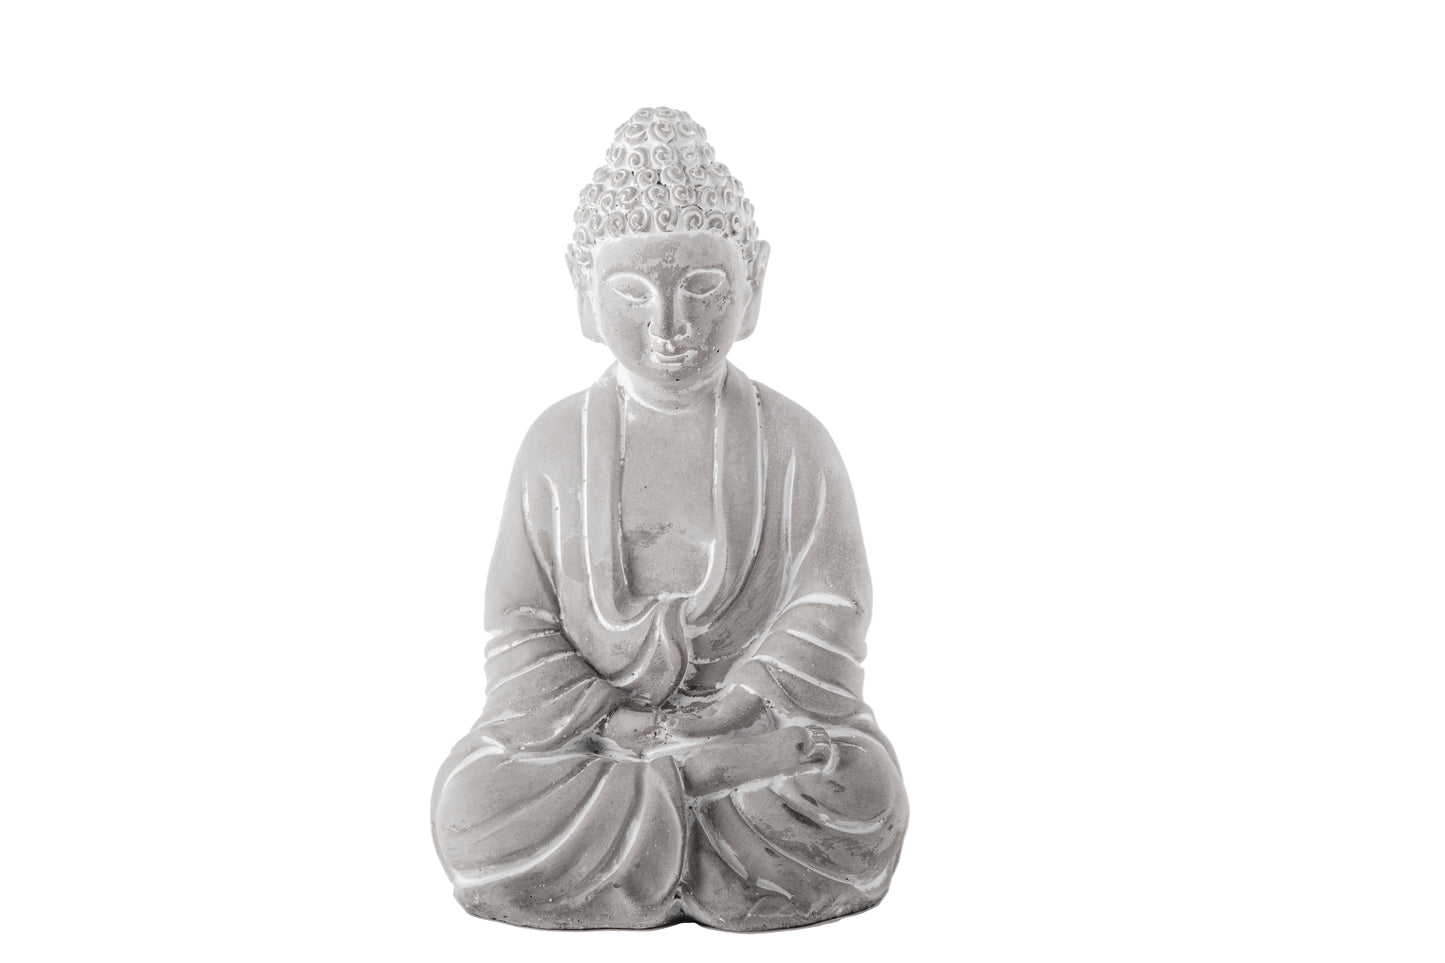 9" Cement Meditating Buddha Figurine in Dhyana Mudra Position